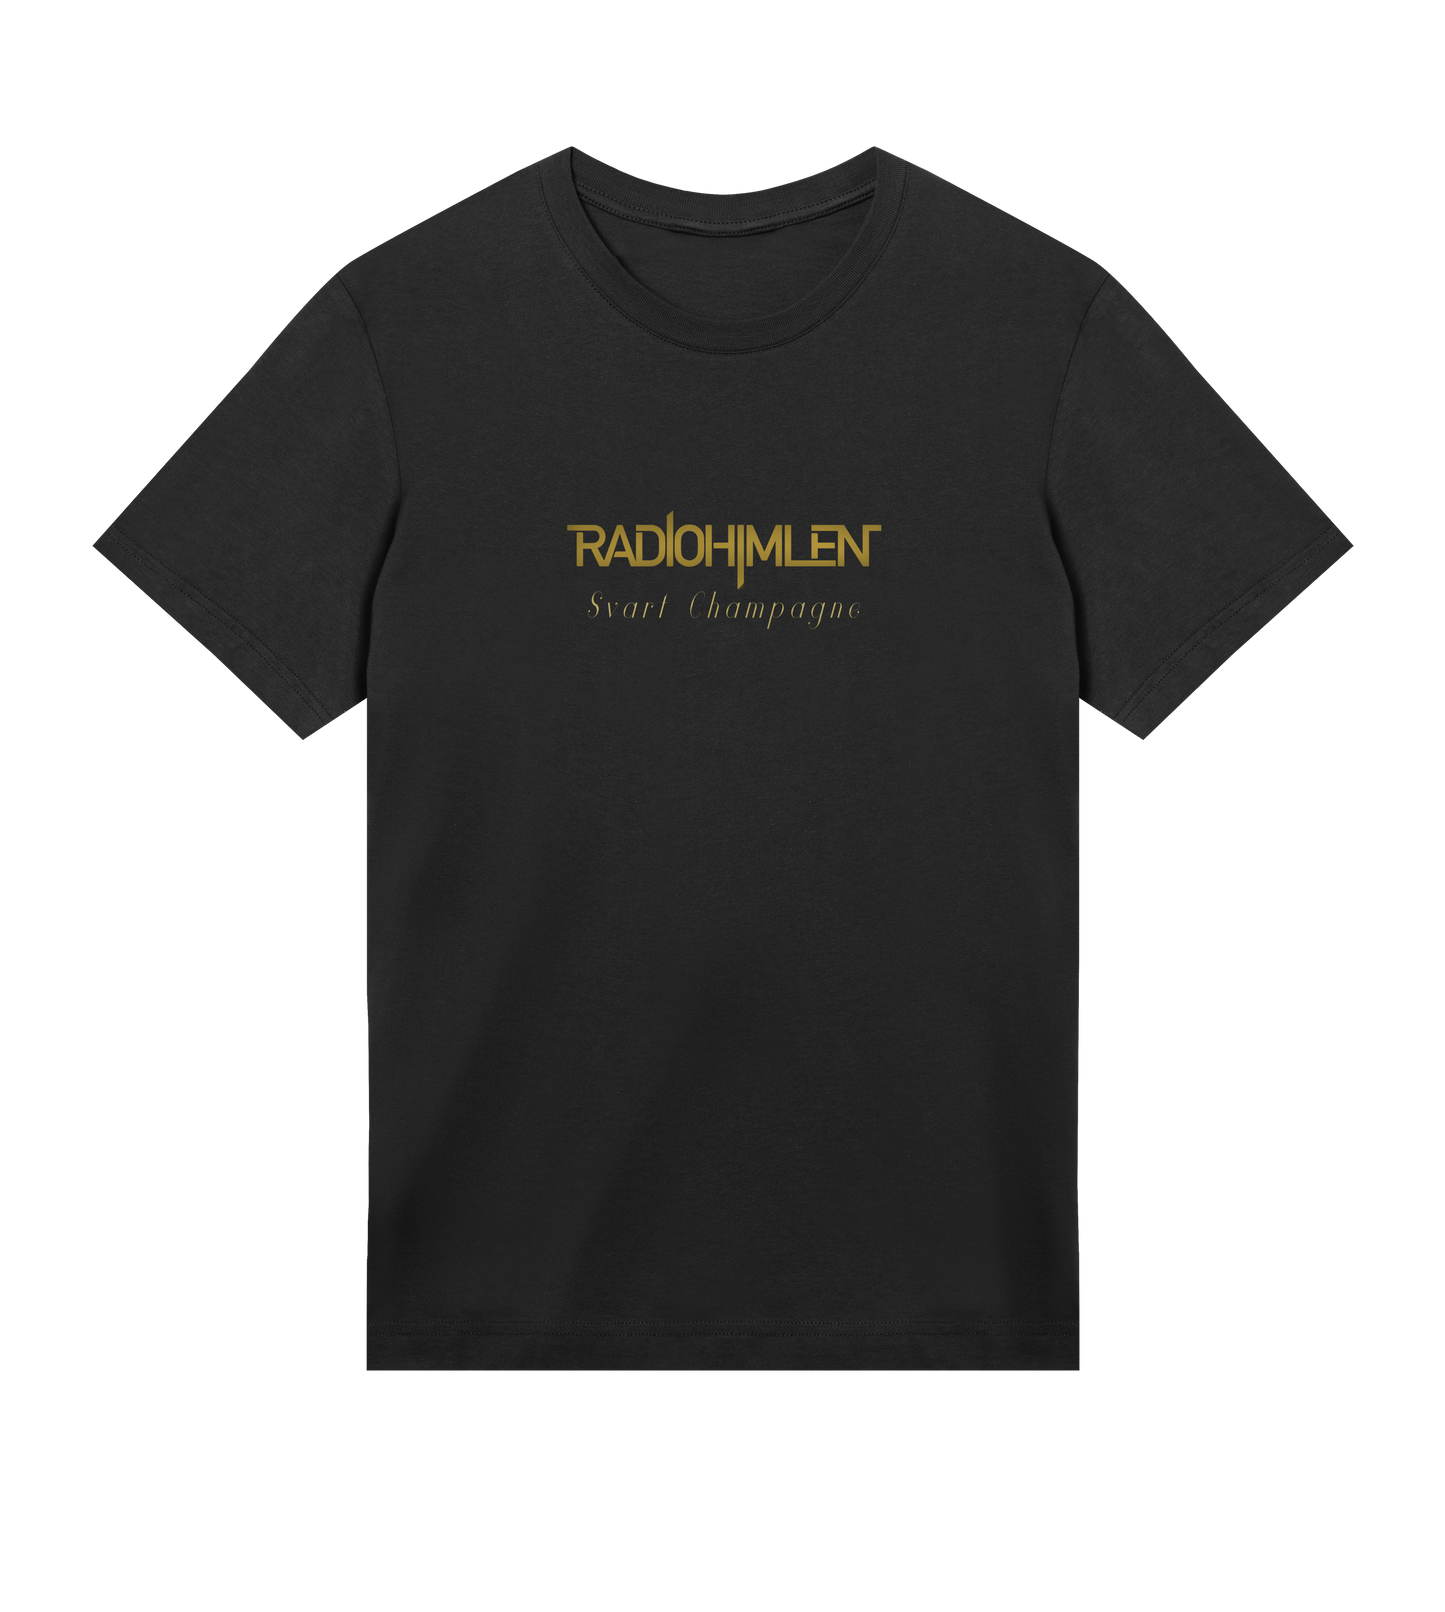 Radiohimlen "Svart Champagne" Men's T-shirt